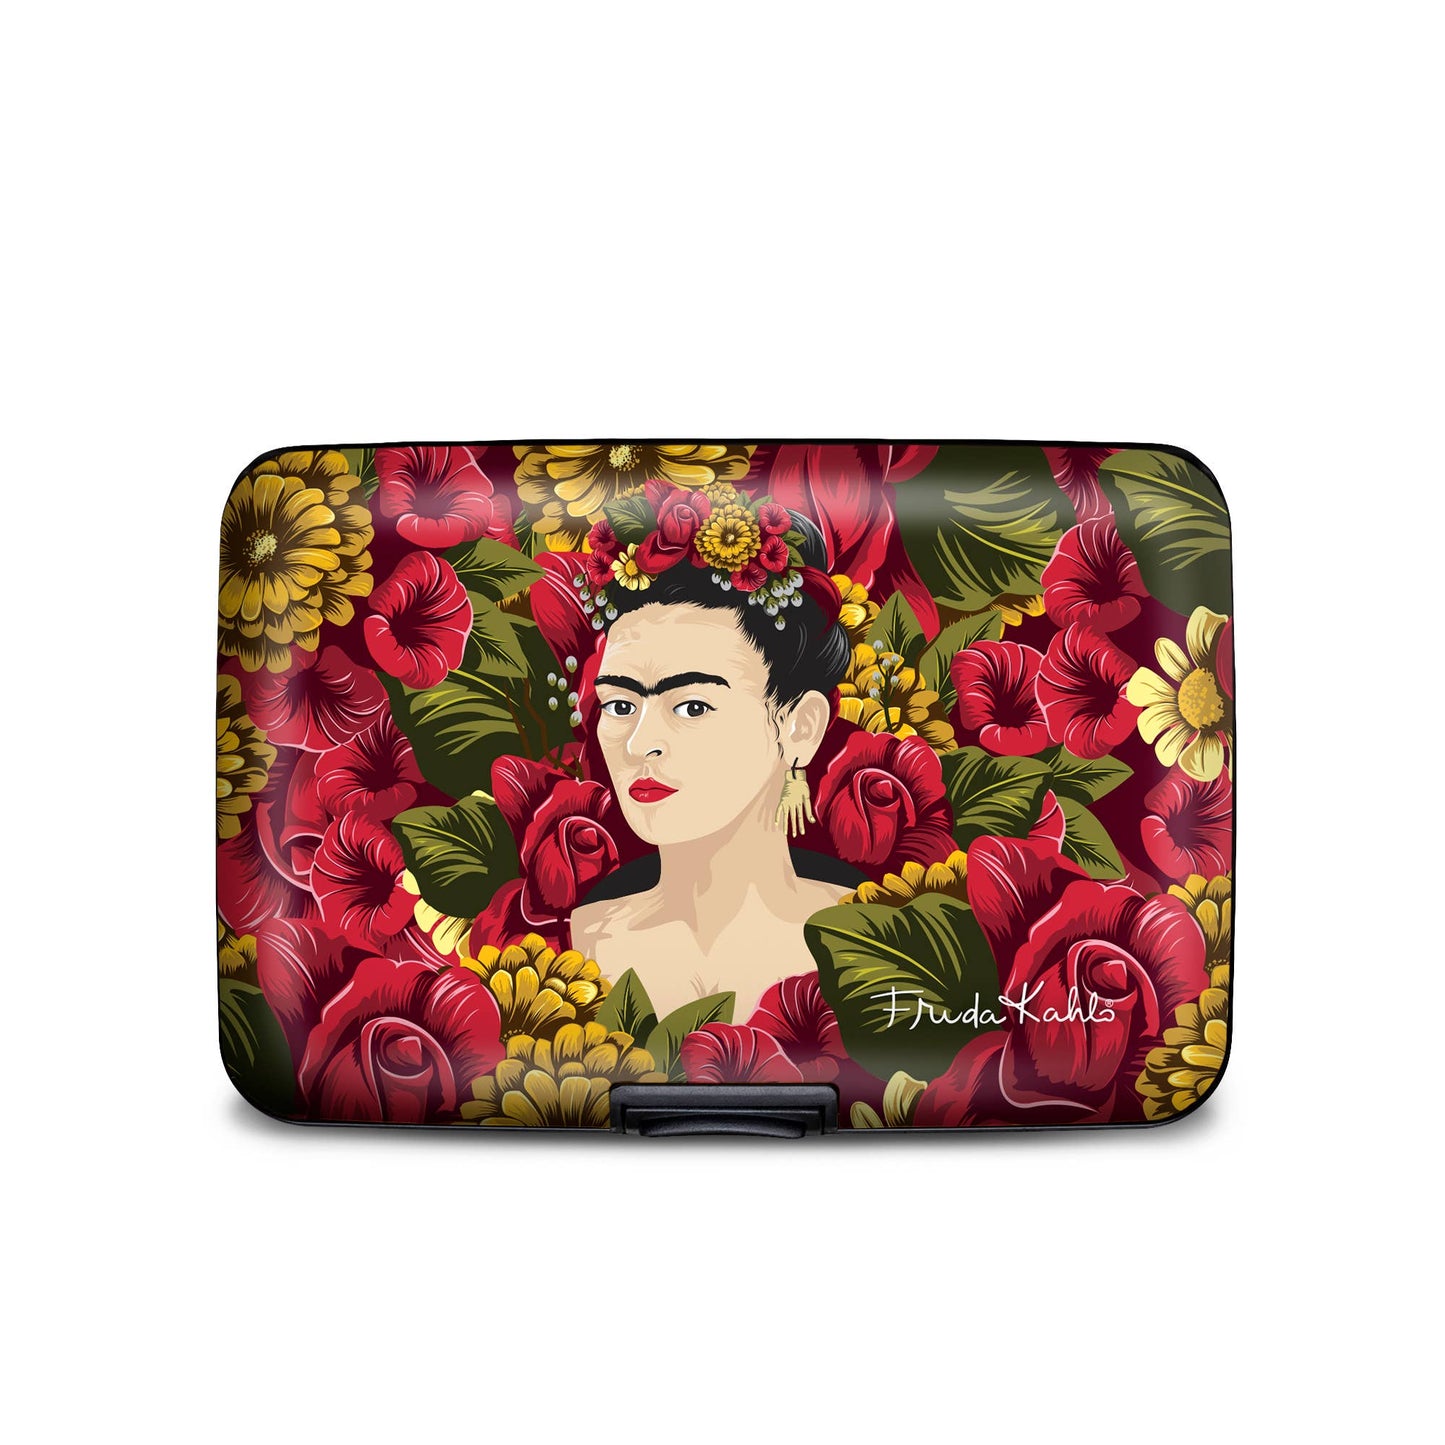 Monarque RFID Armored Wallet - Frida Kahlo Rose Portrait